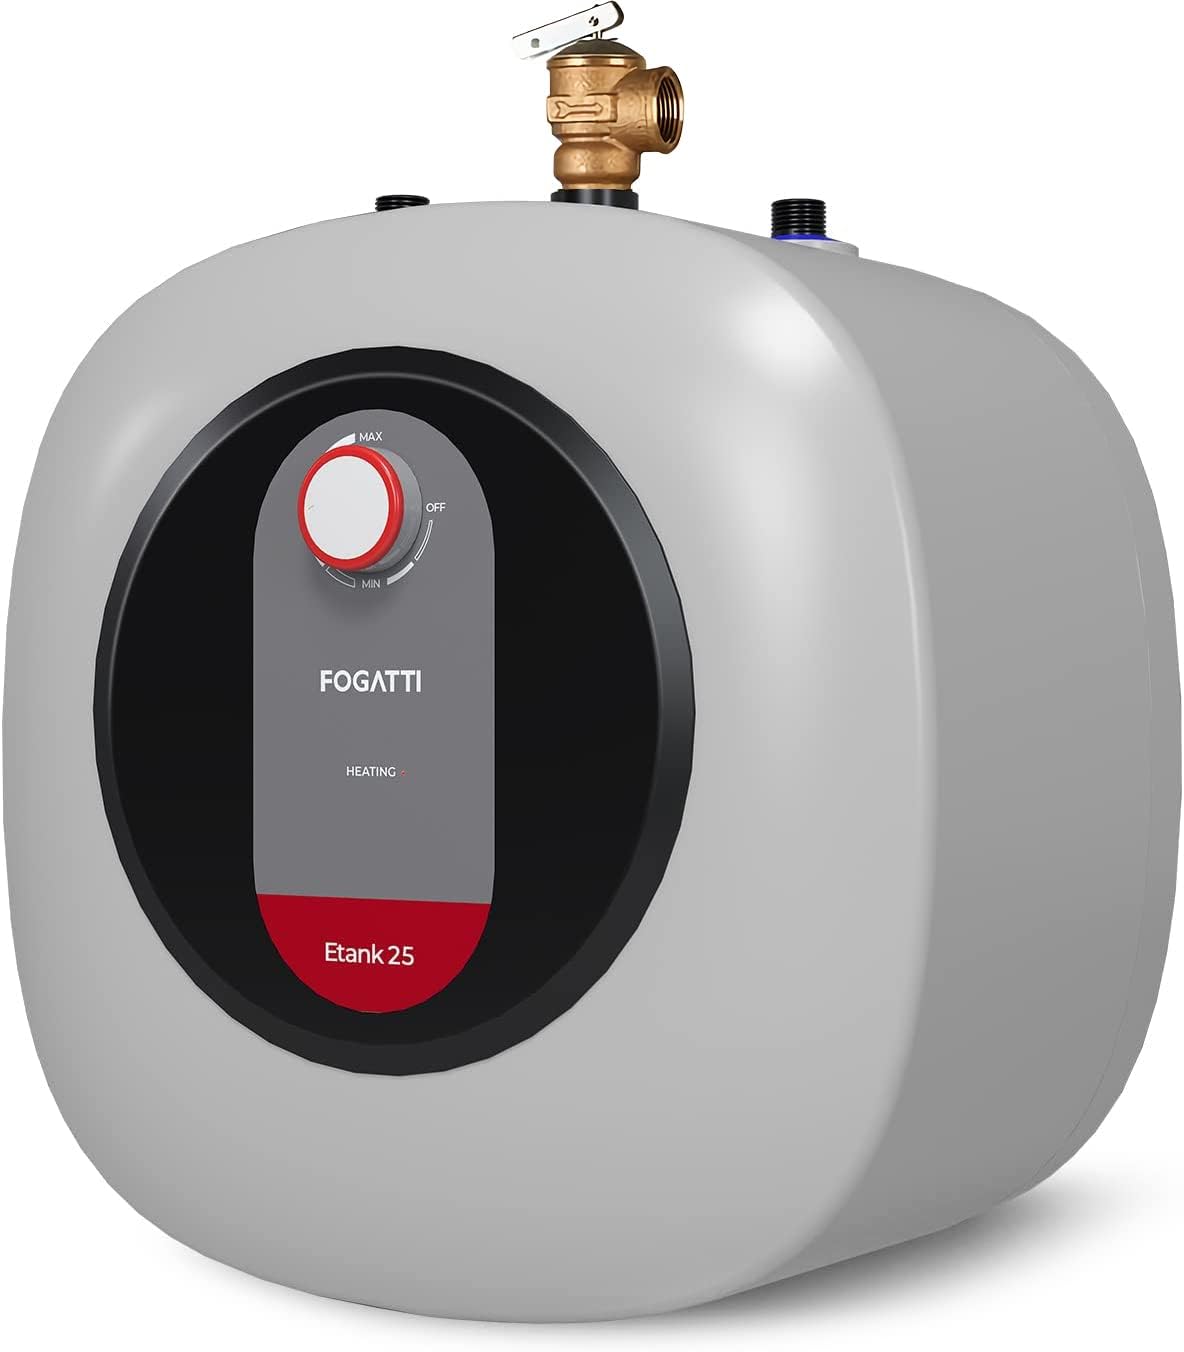 FOGATTI Electric Mini-Tank Water Heater, 2.5-Gallon [...]